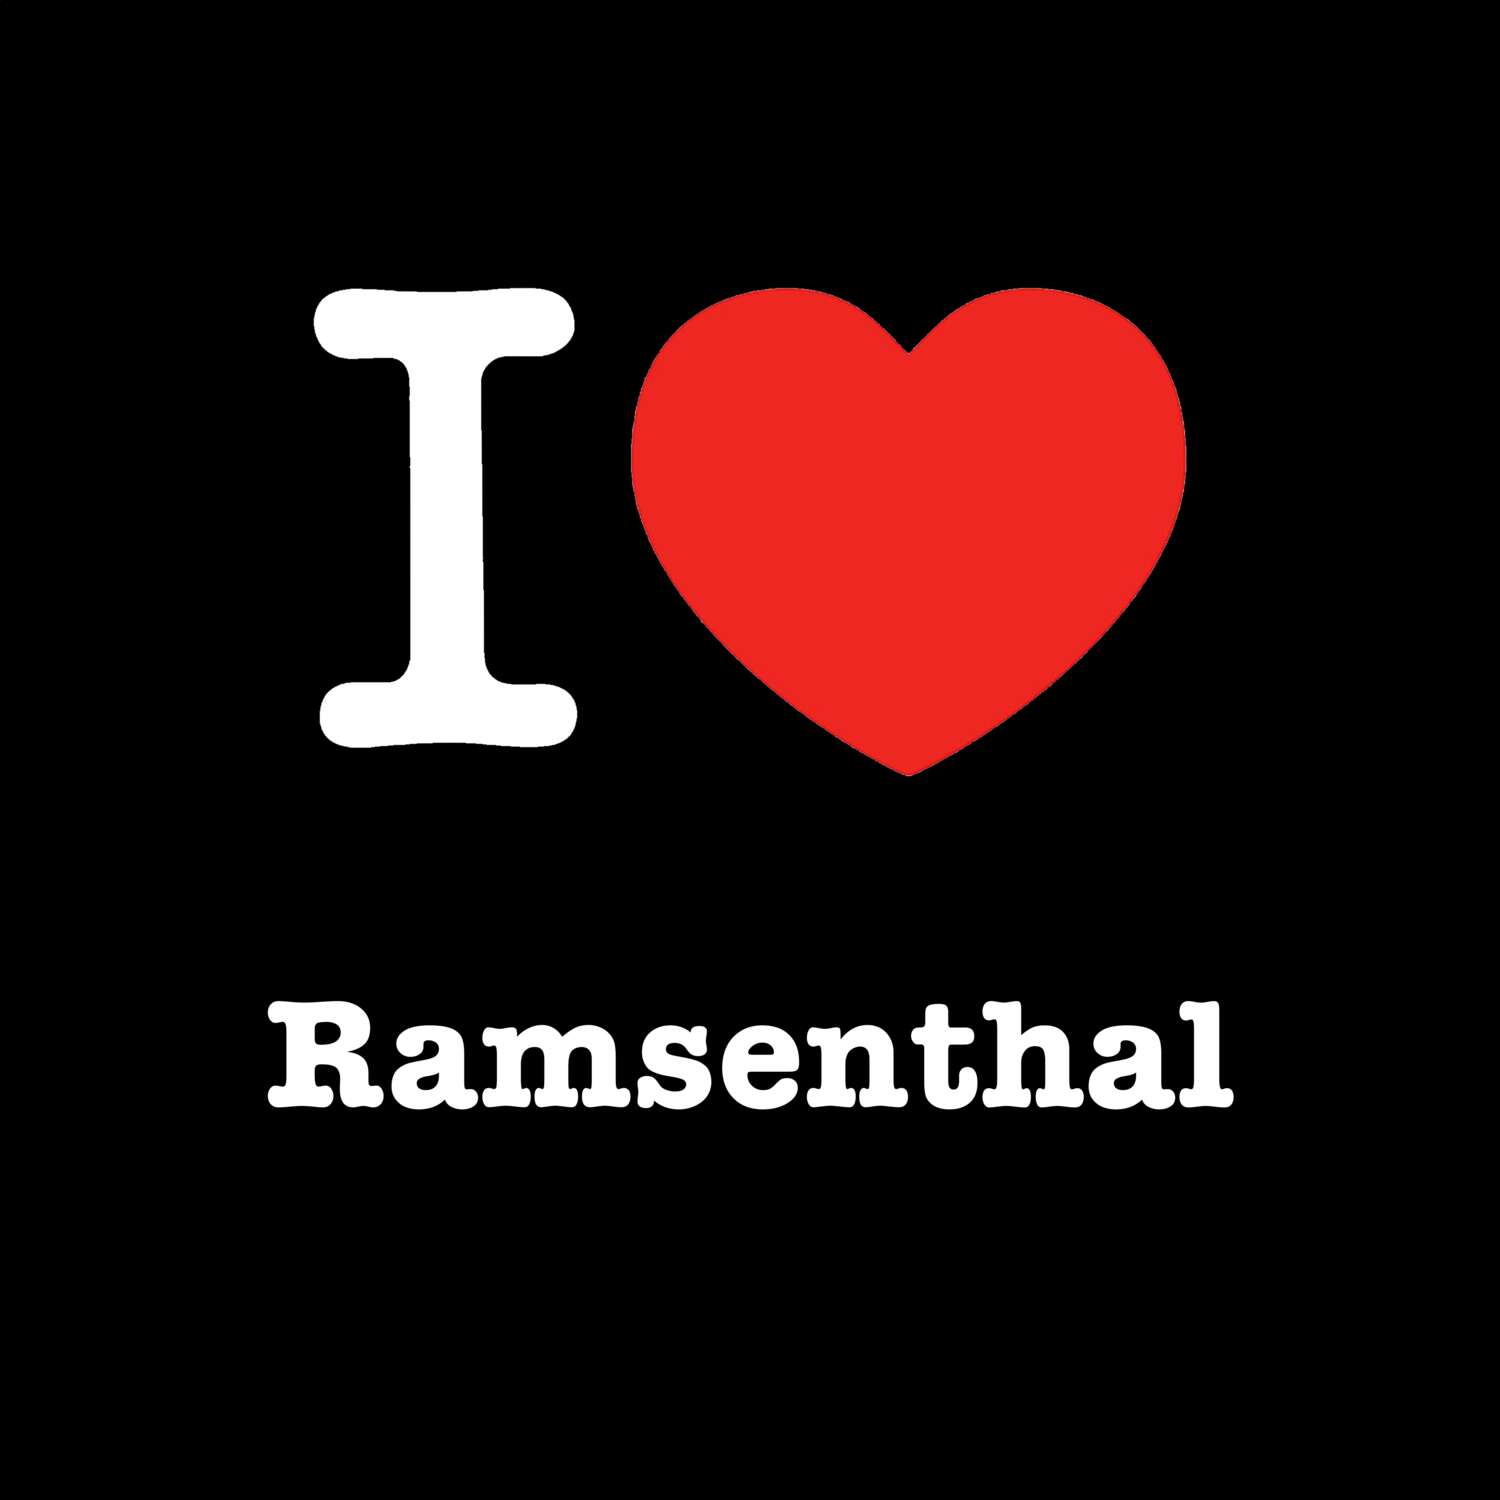 Ramsenthal T-Shirt »I love«